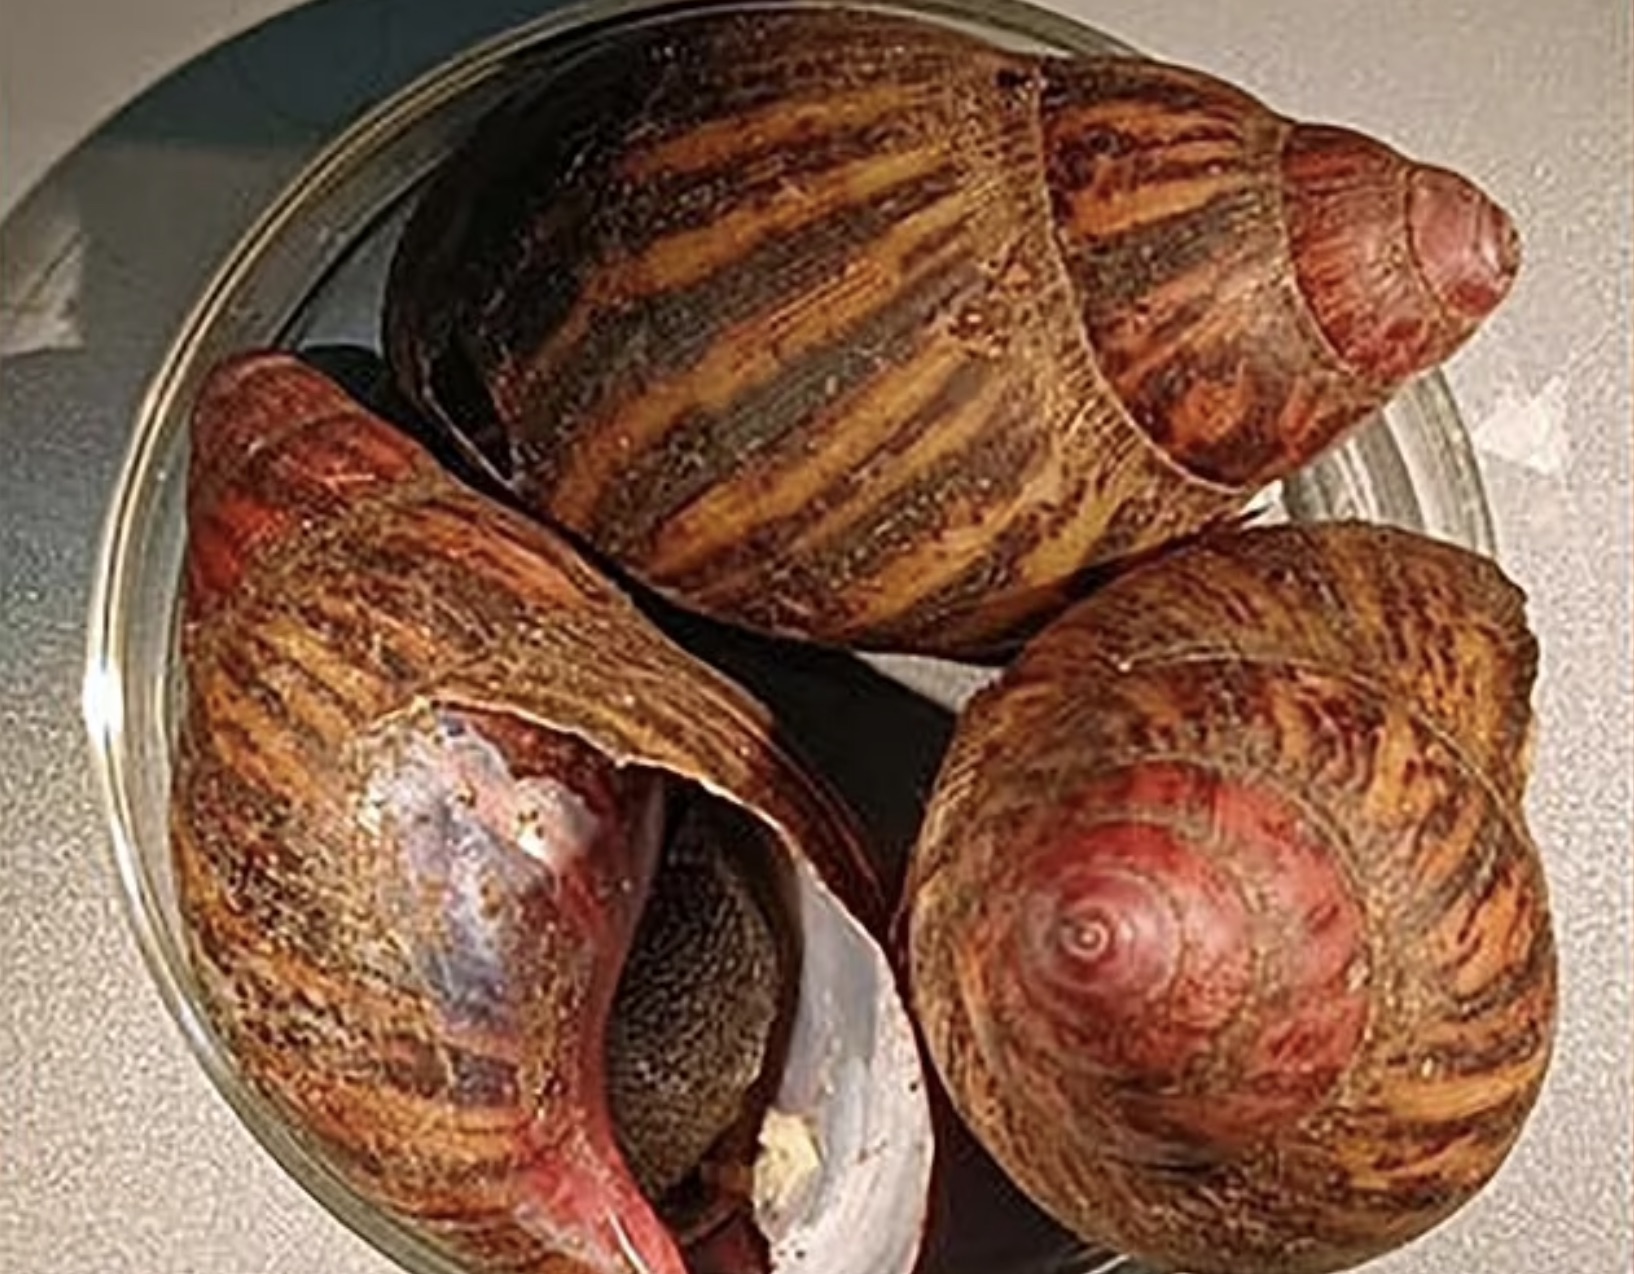 The Nigerian giant snails said to cause rare form of meningitis